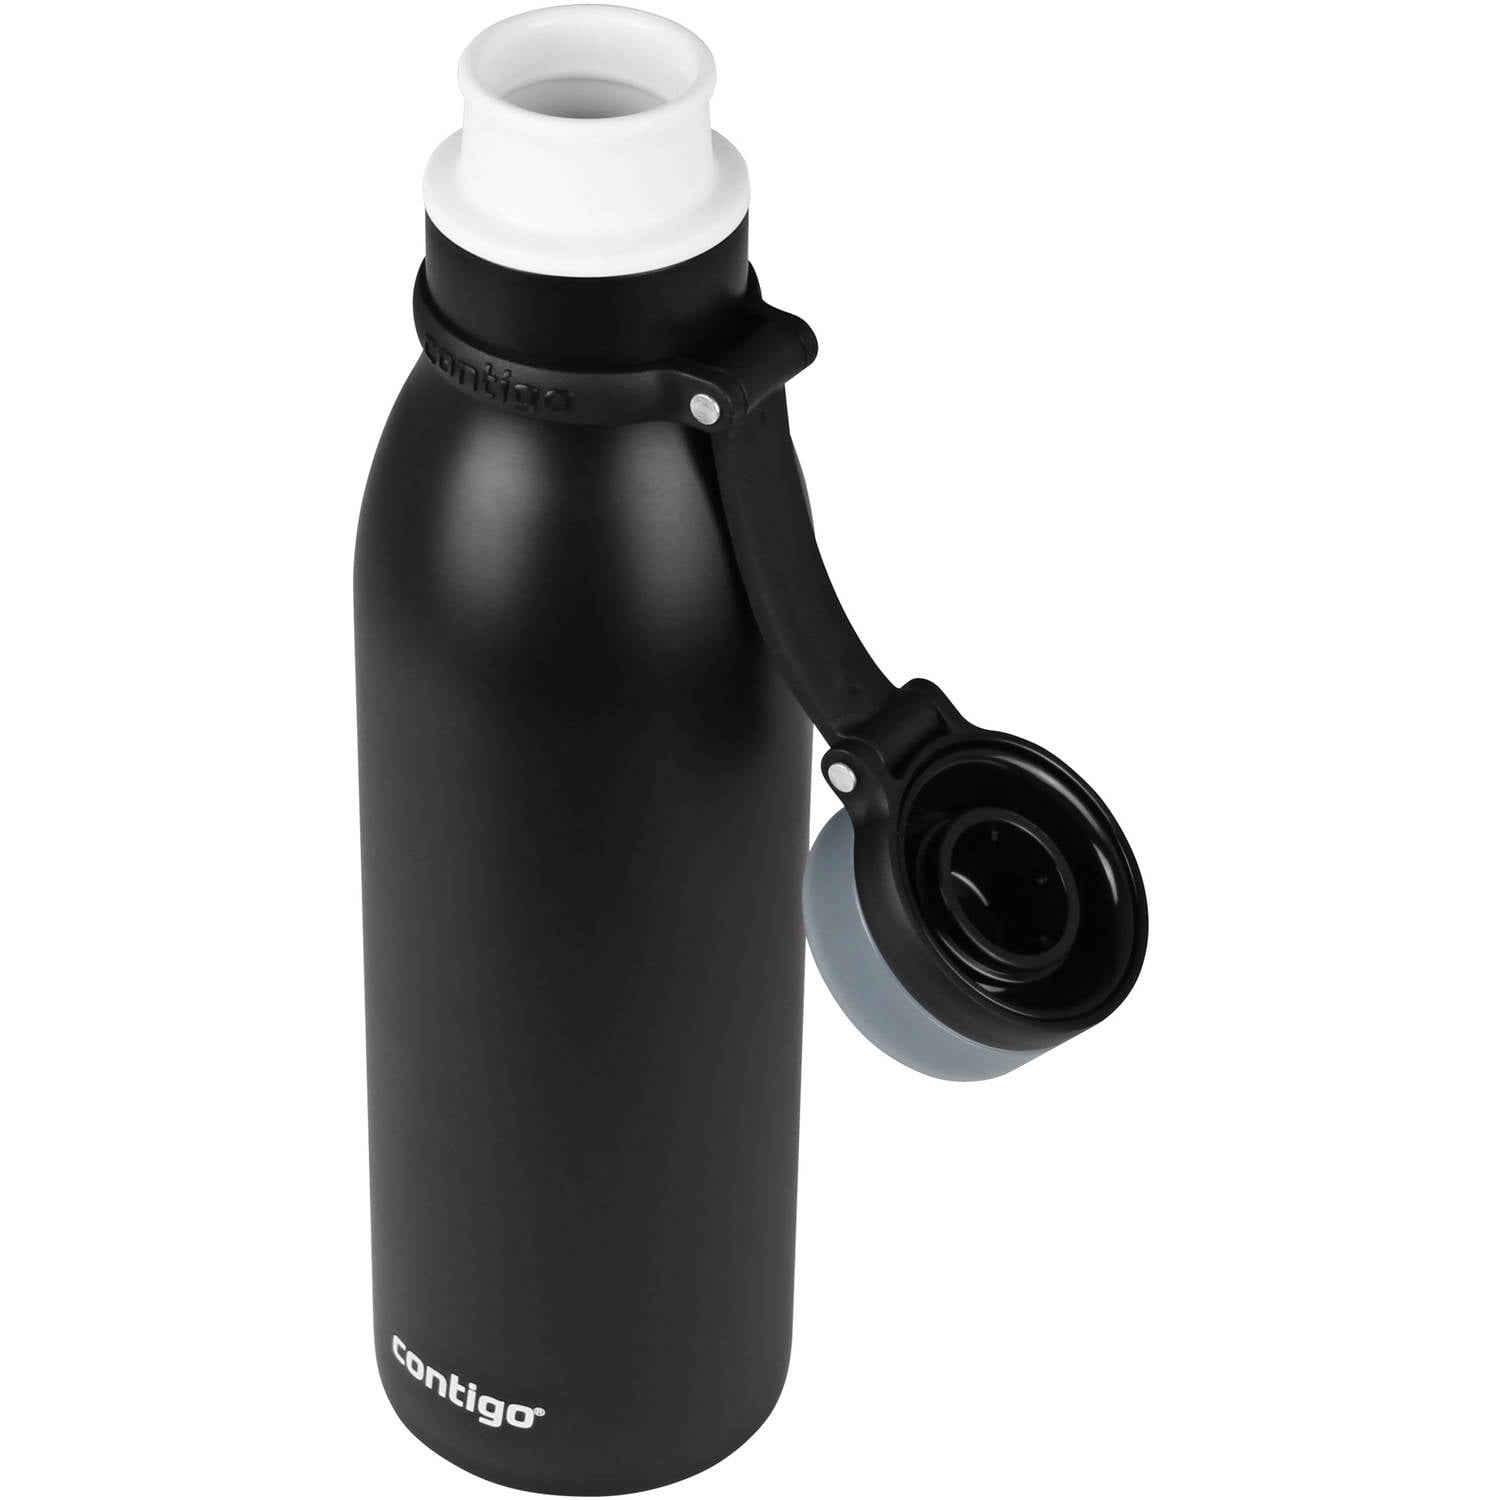 Matterhorn Stainless Steel Water Bottle, 20oz